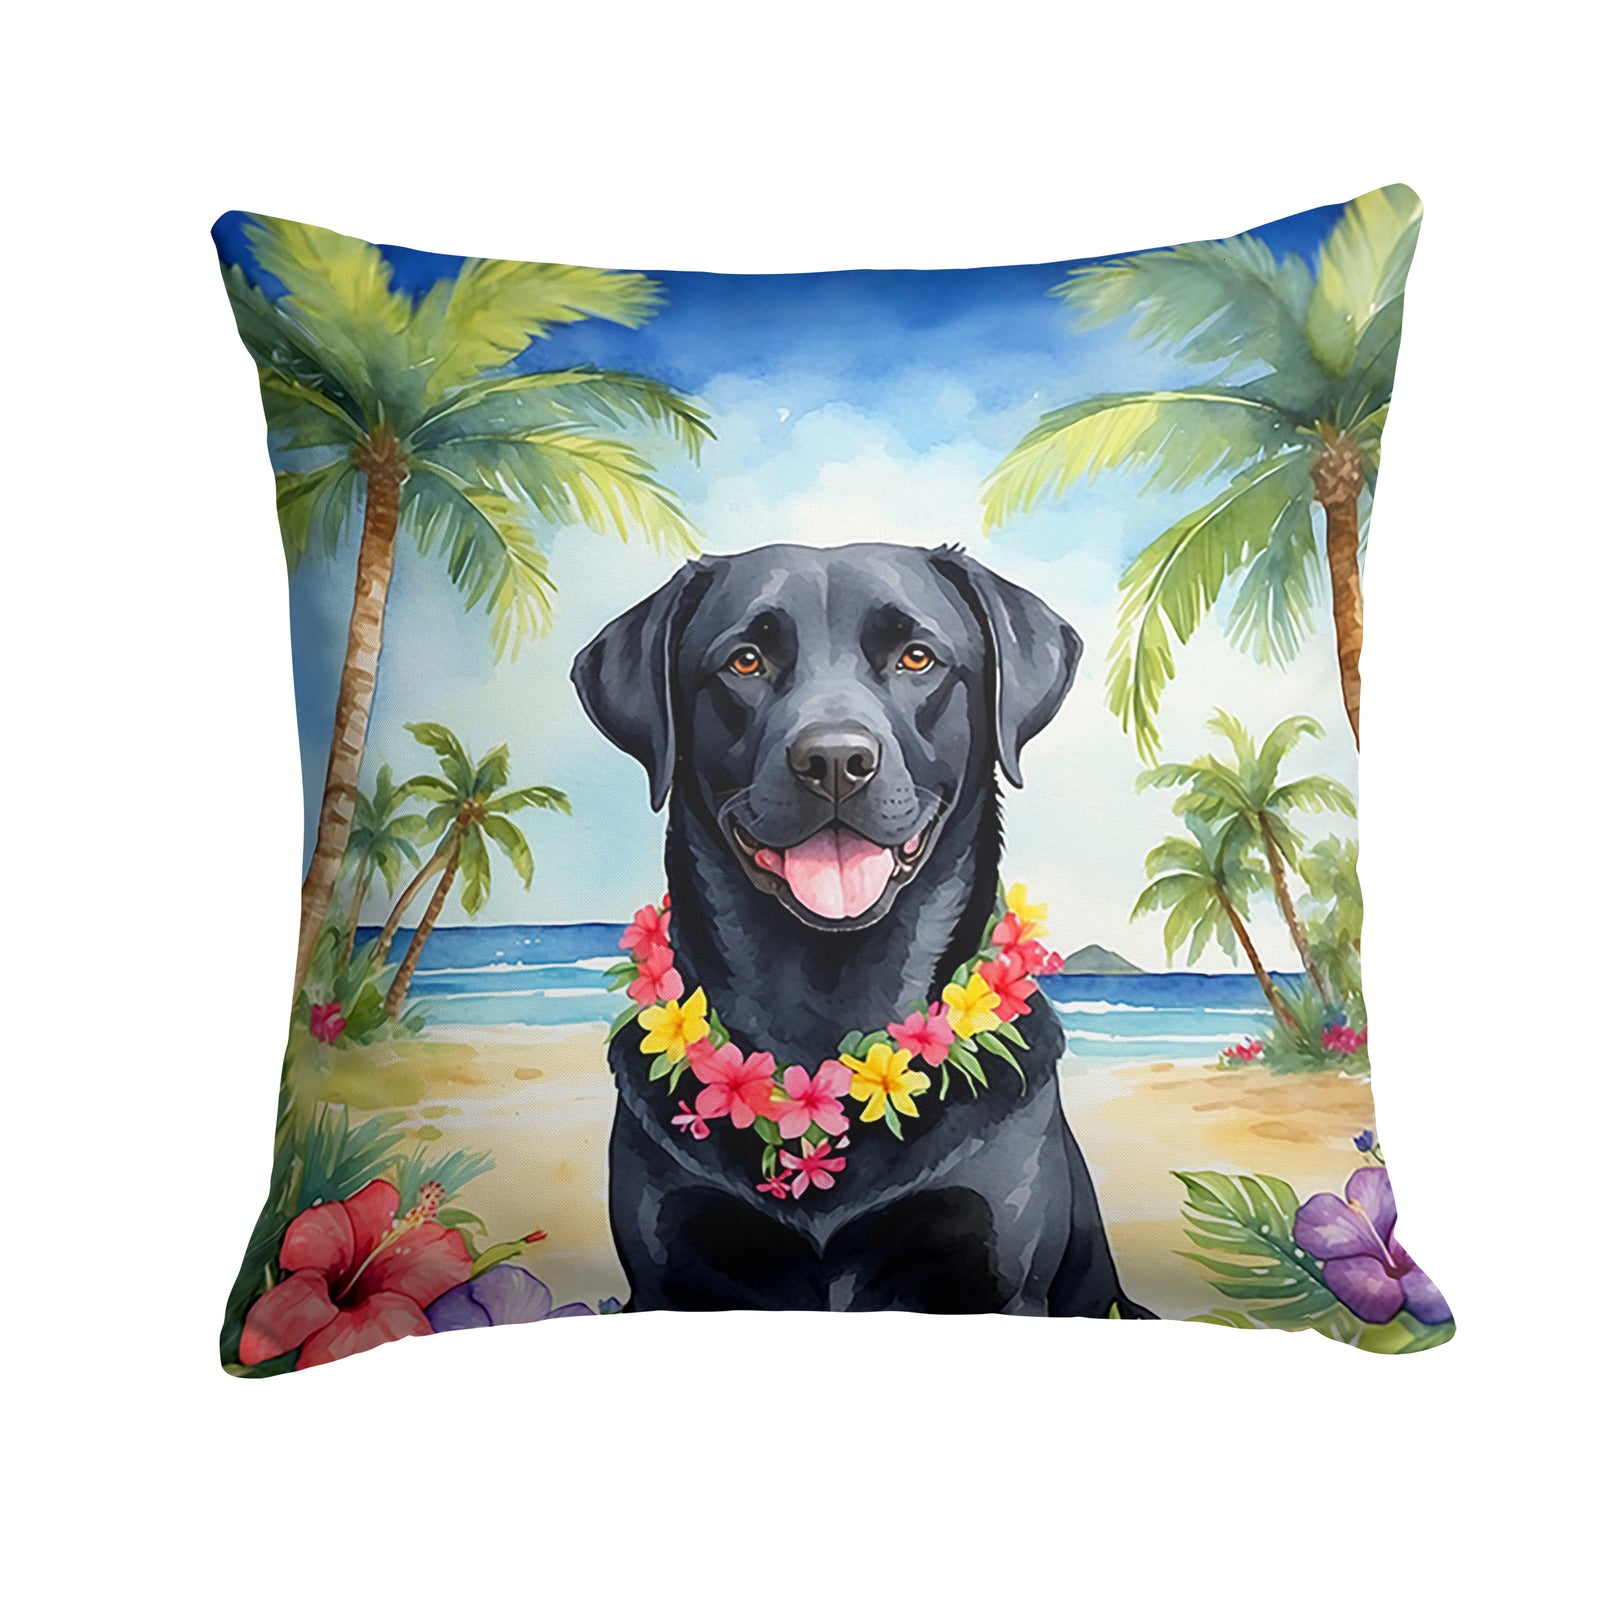 Buy this Black Labrador Retriever Luau Throw Pillow